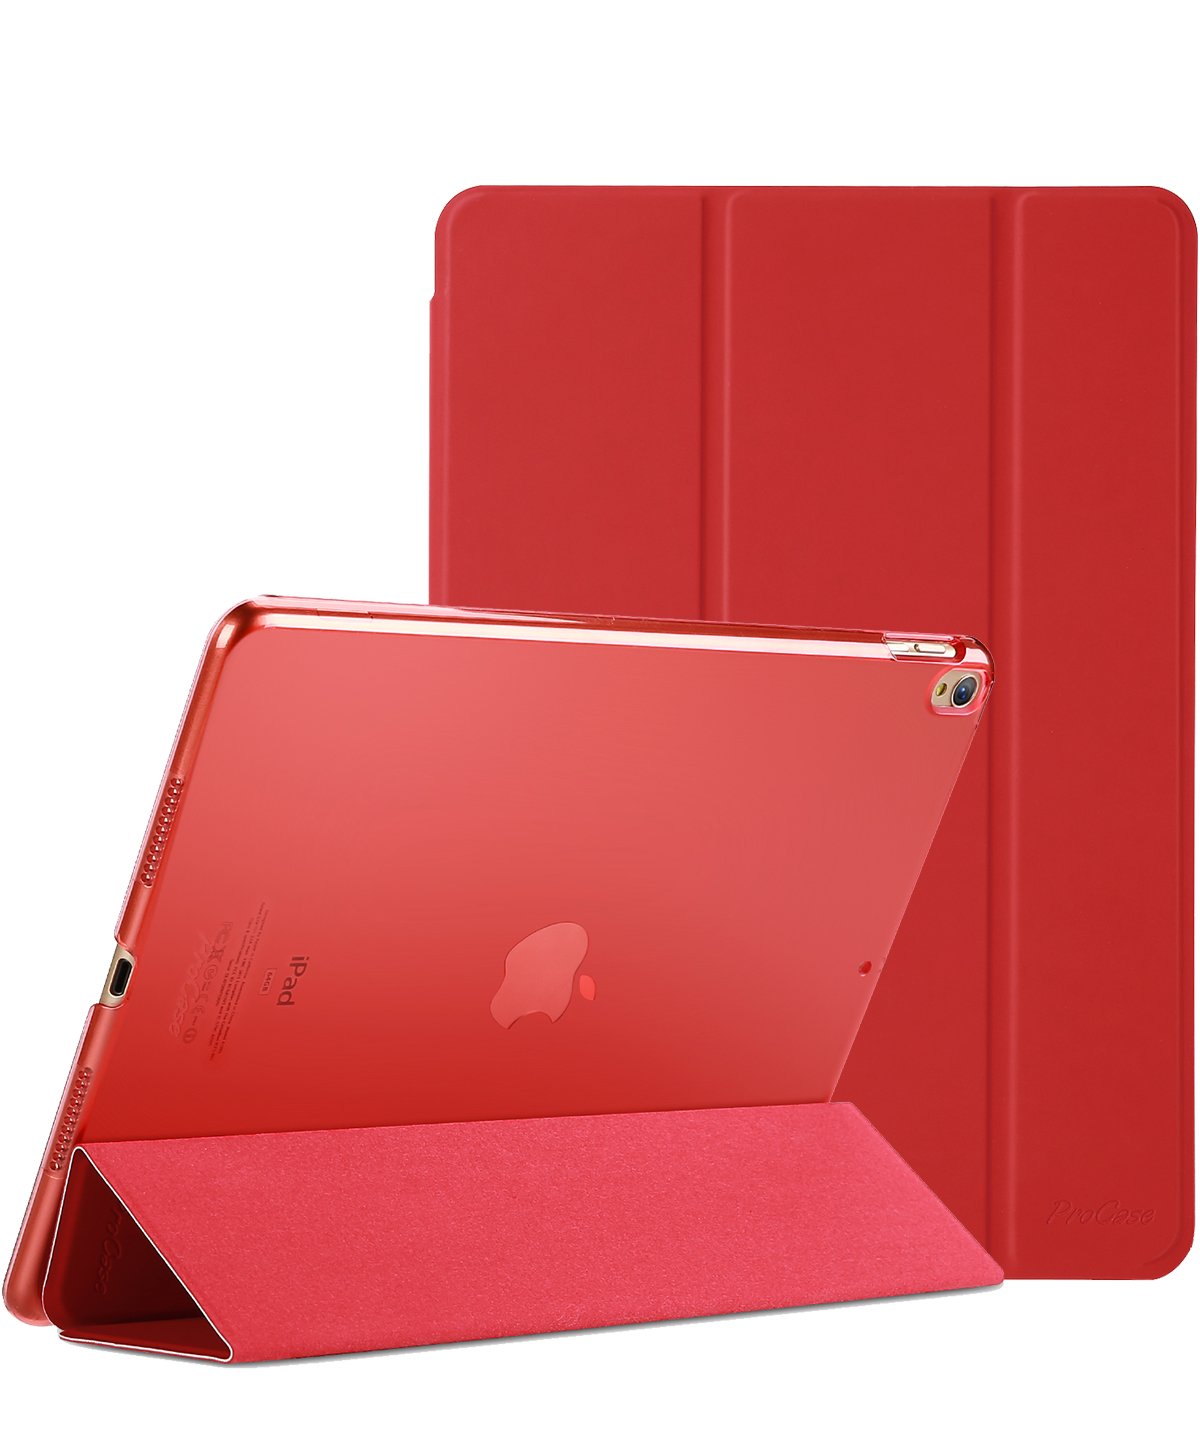 iPad Air 10.5 3rd Generation 2019 / iPad Pro 10.5 2017 Case | ProCase red